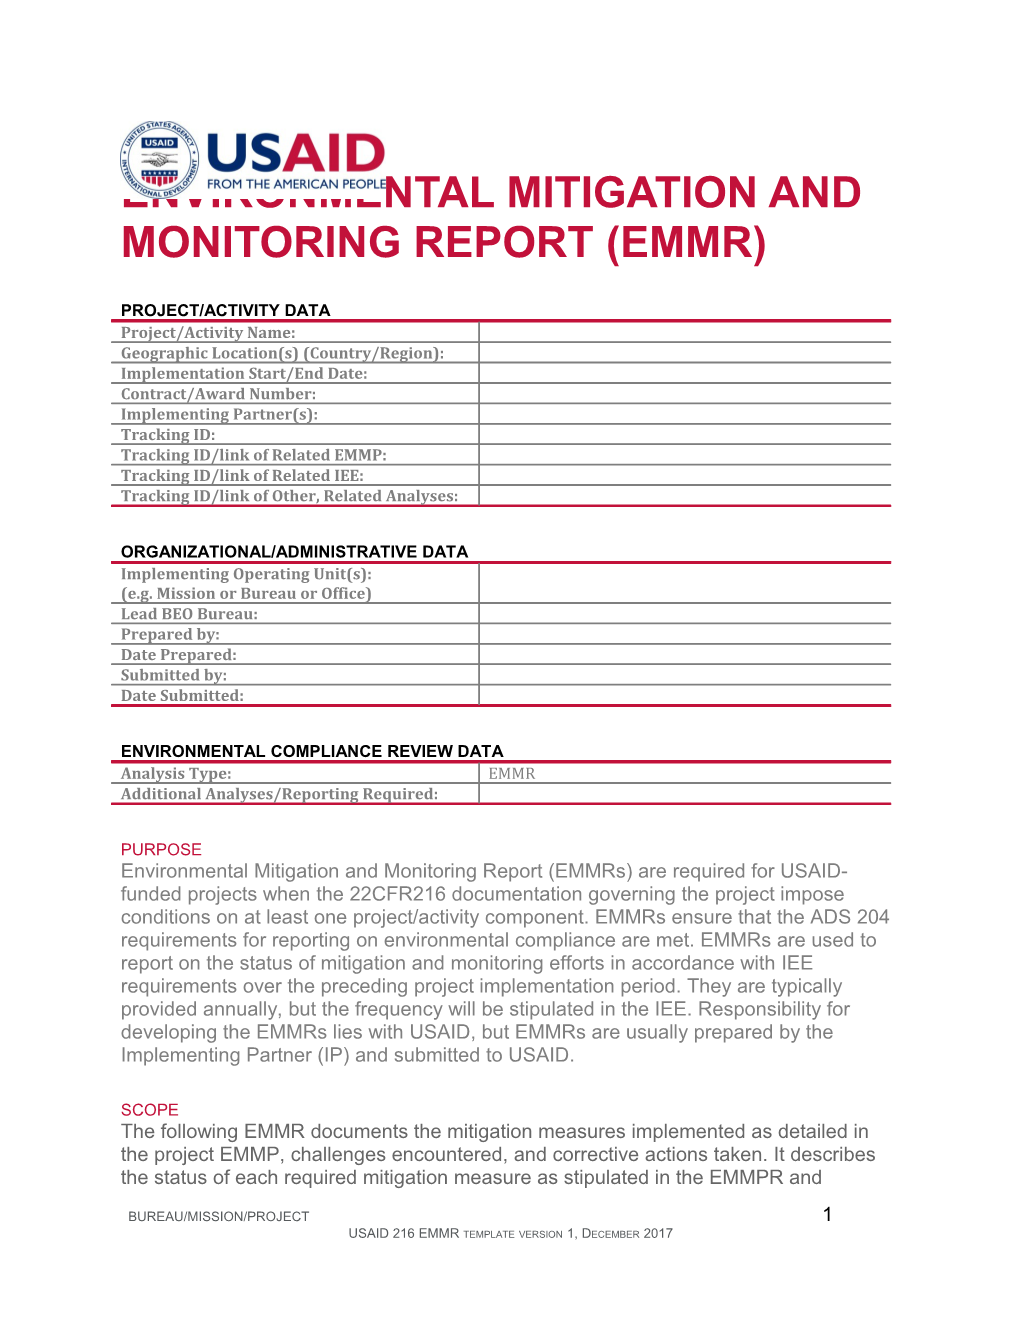 Environmental Mitigation and Monitoring Report (EMMR)